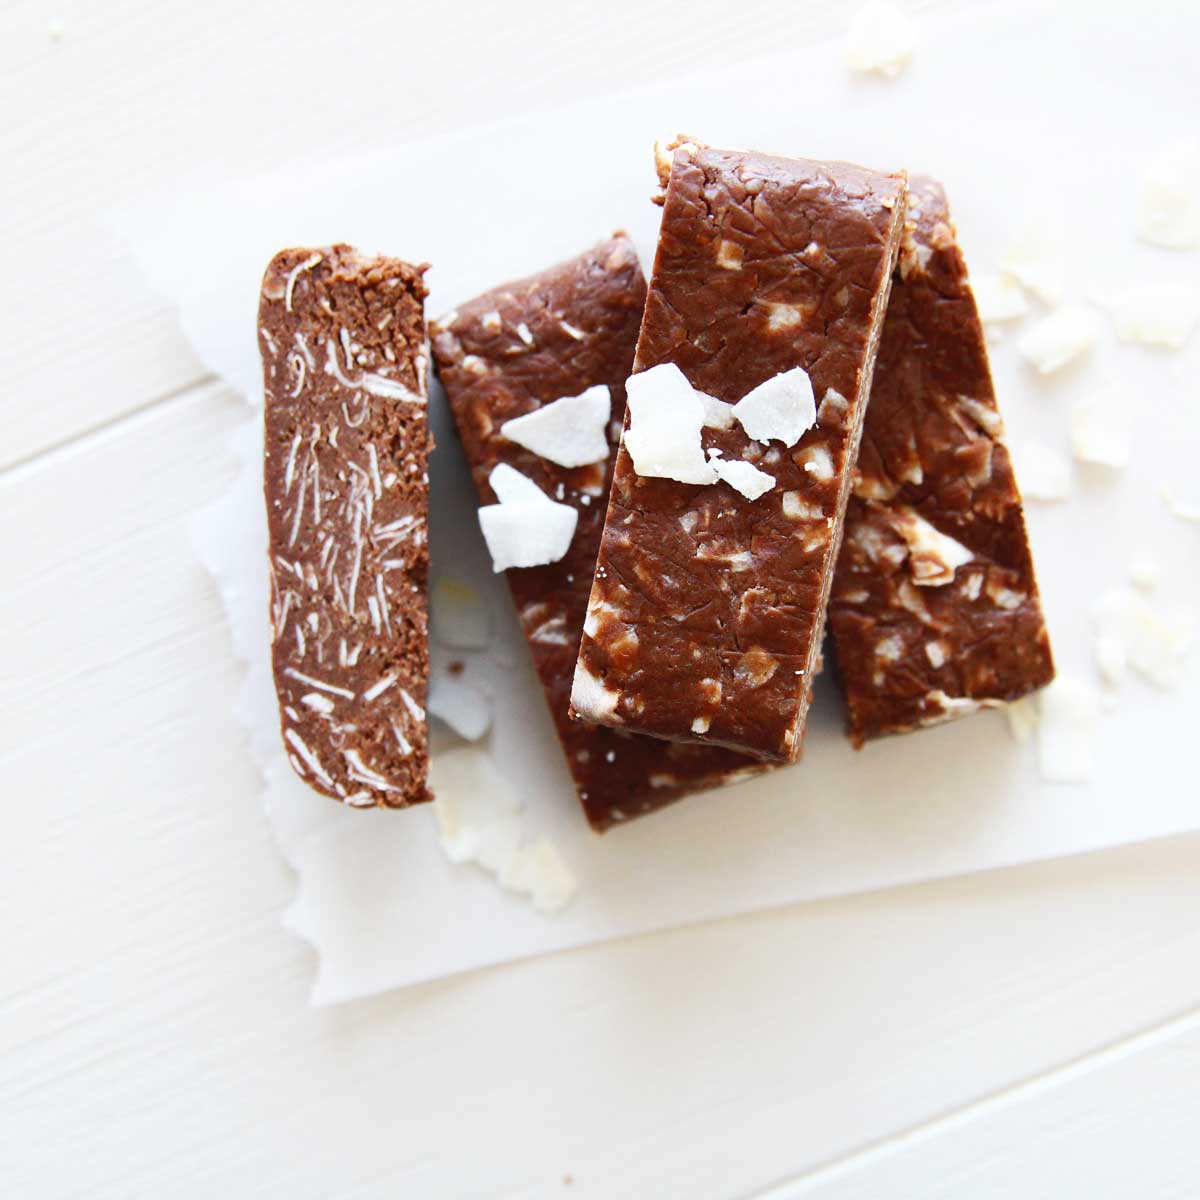 Vegan Coconut Chocolate "Almond Joy" Protein Bars Recipe